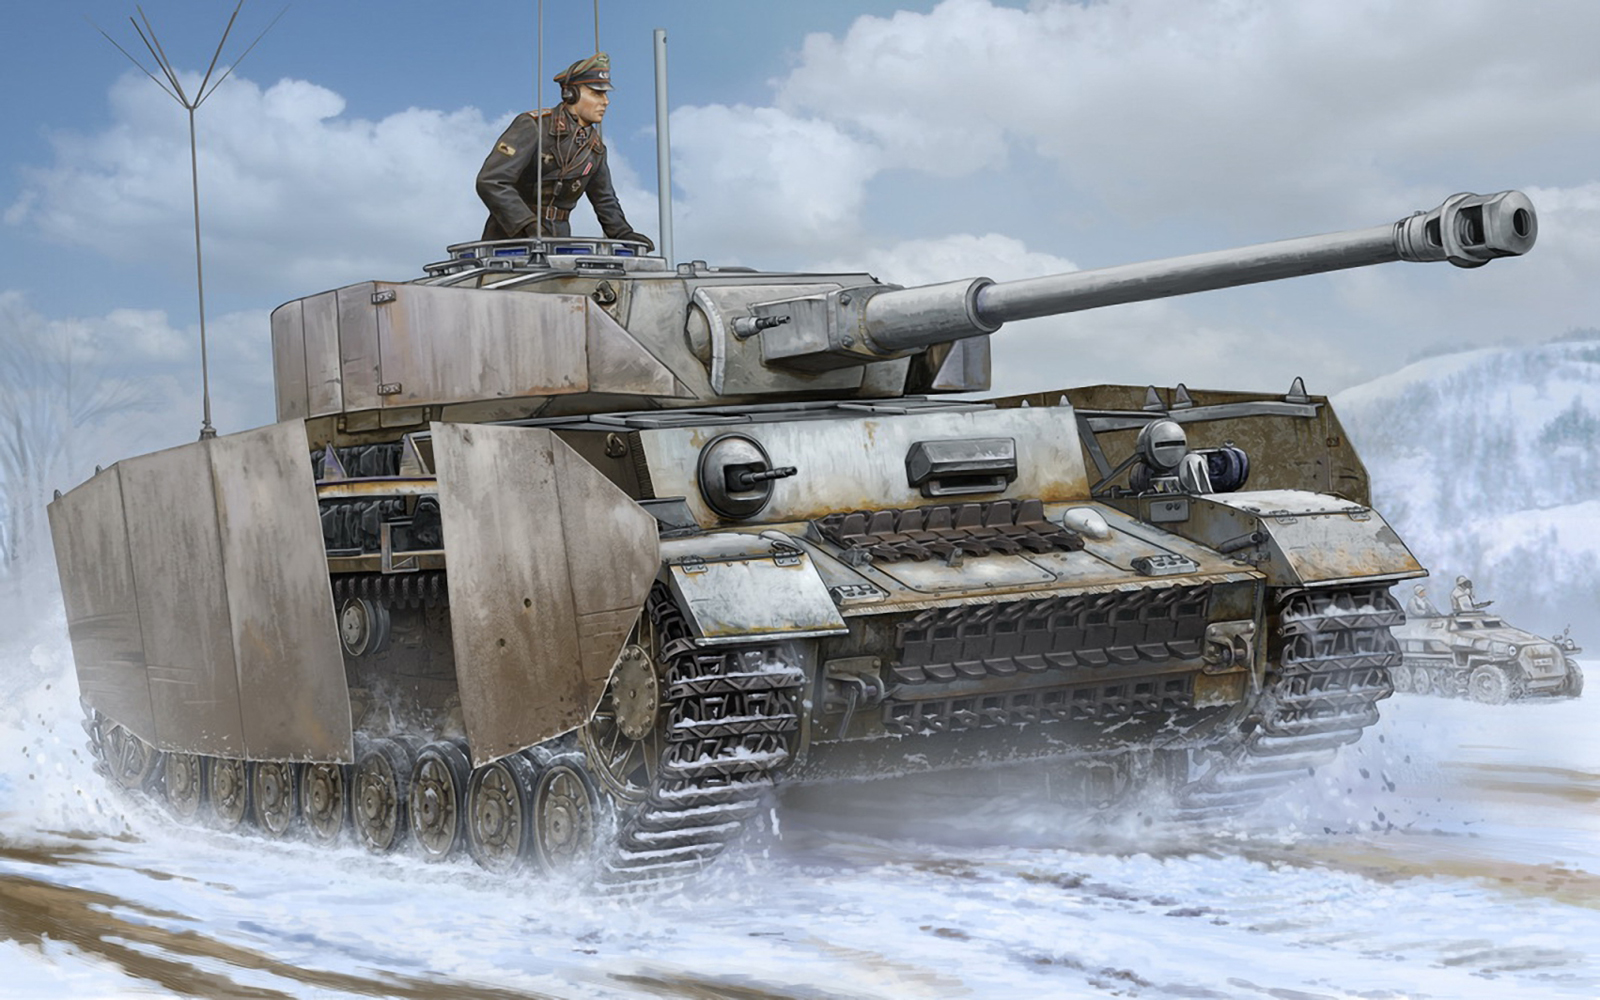 General 1600x1000 tank army snow military artwork military vehicle clouds uniform hat headphones sky Panzer IV World War II German tanks